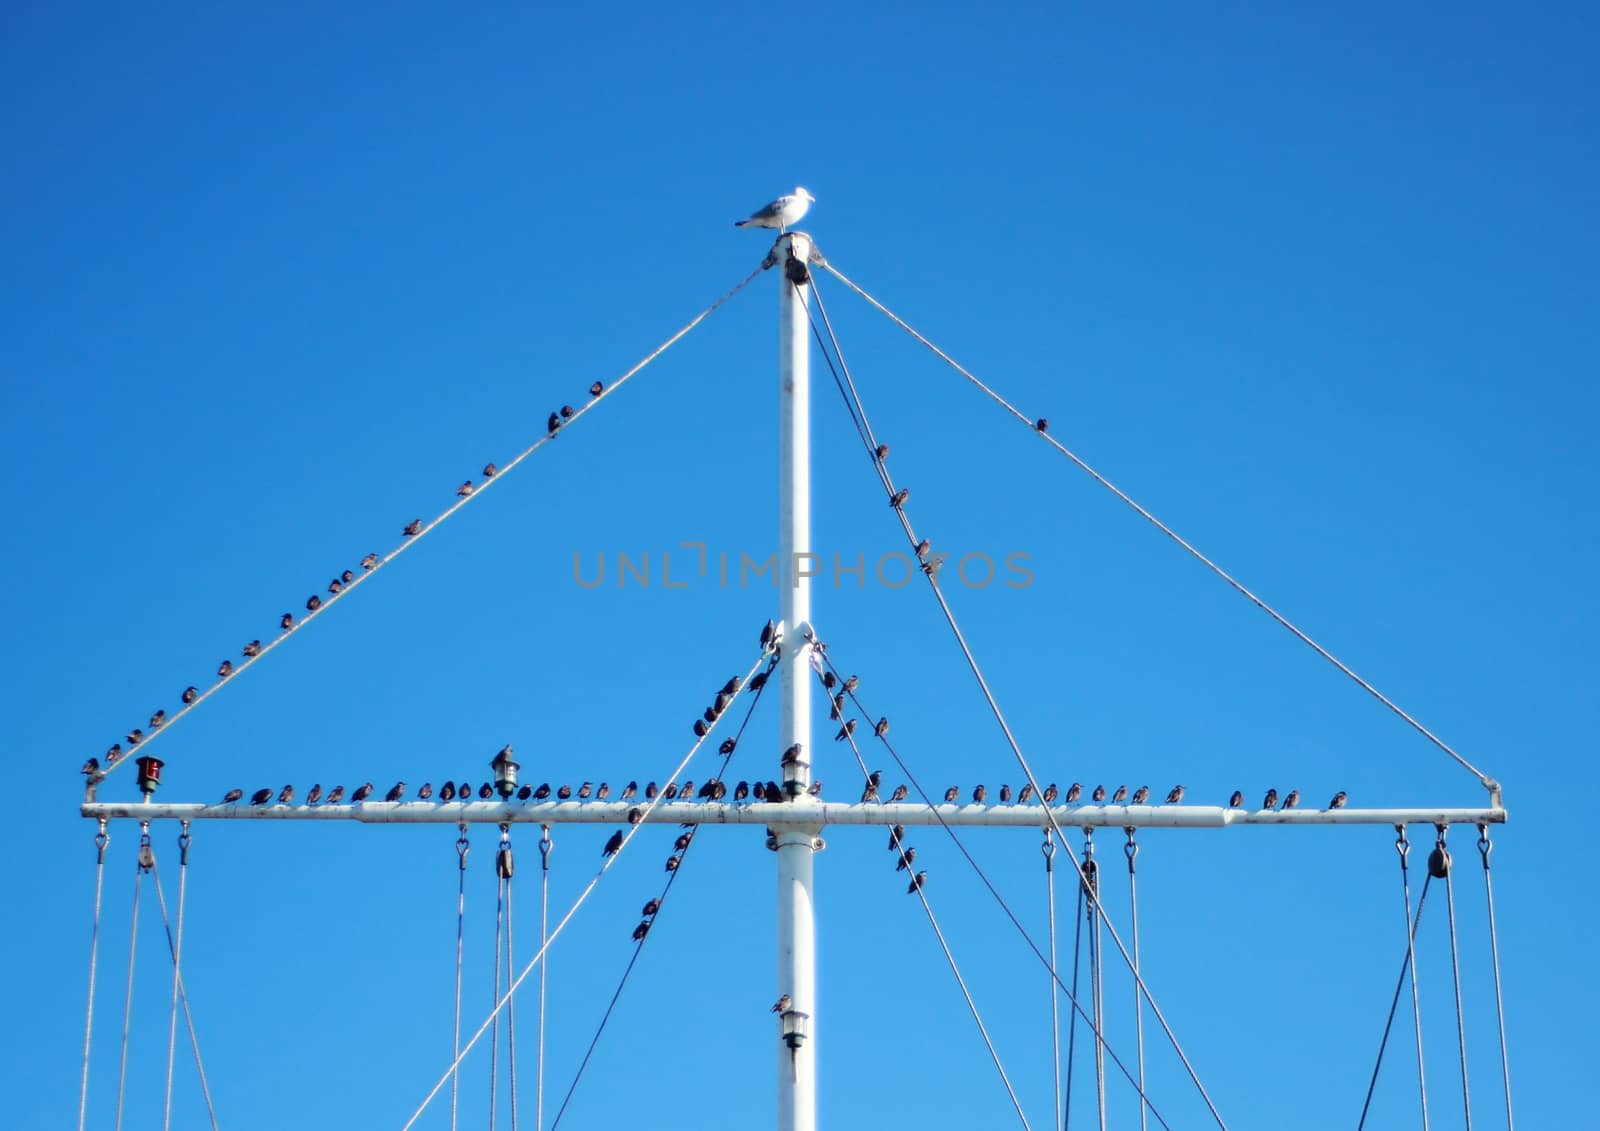 Flock of sea birds sitting on a boat mast